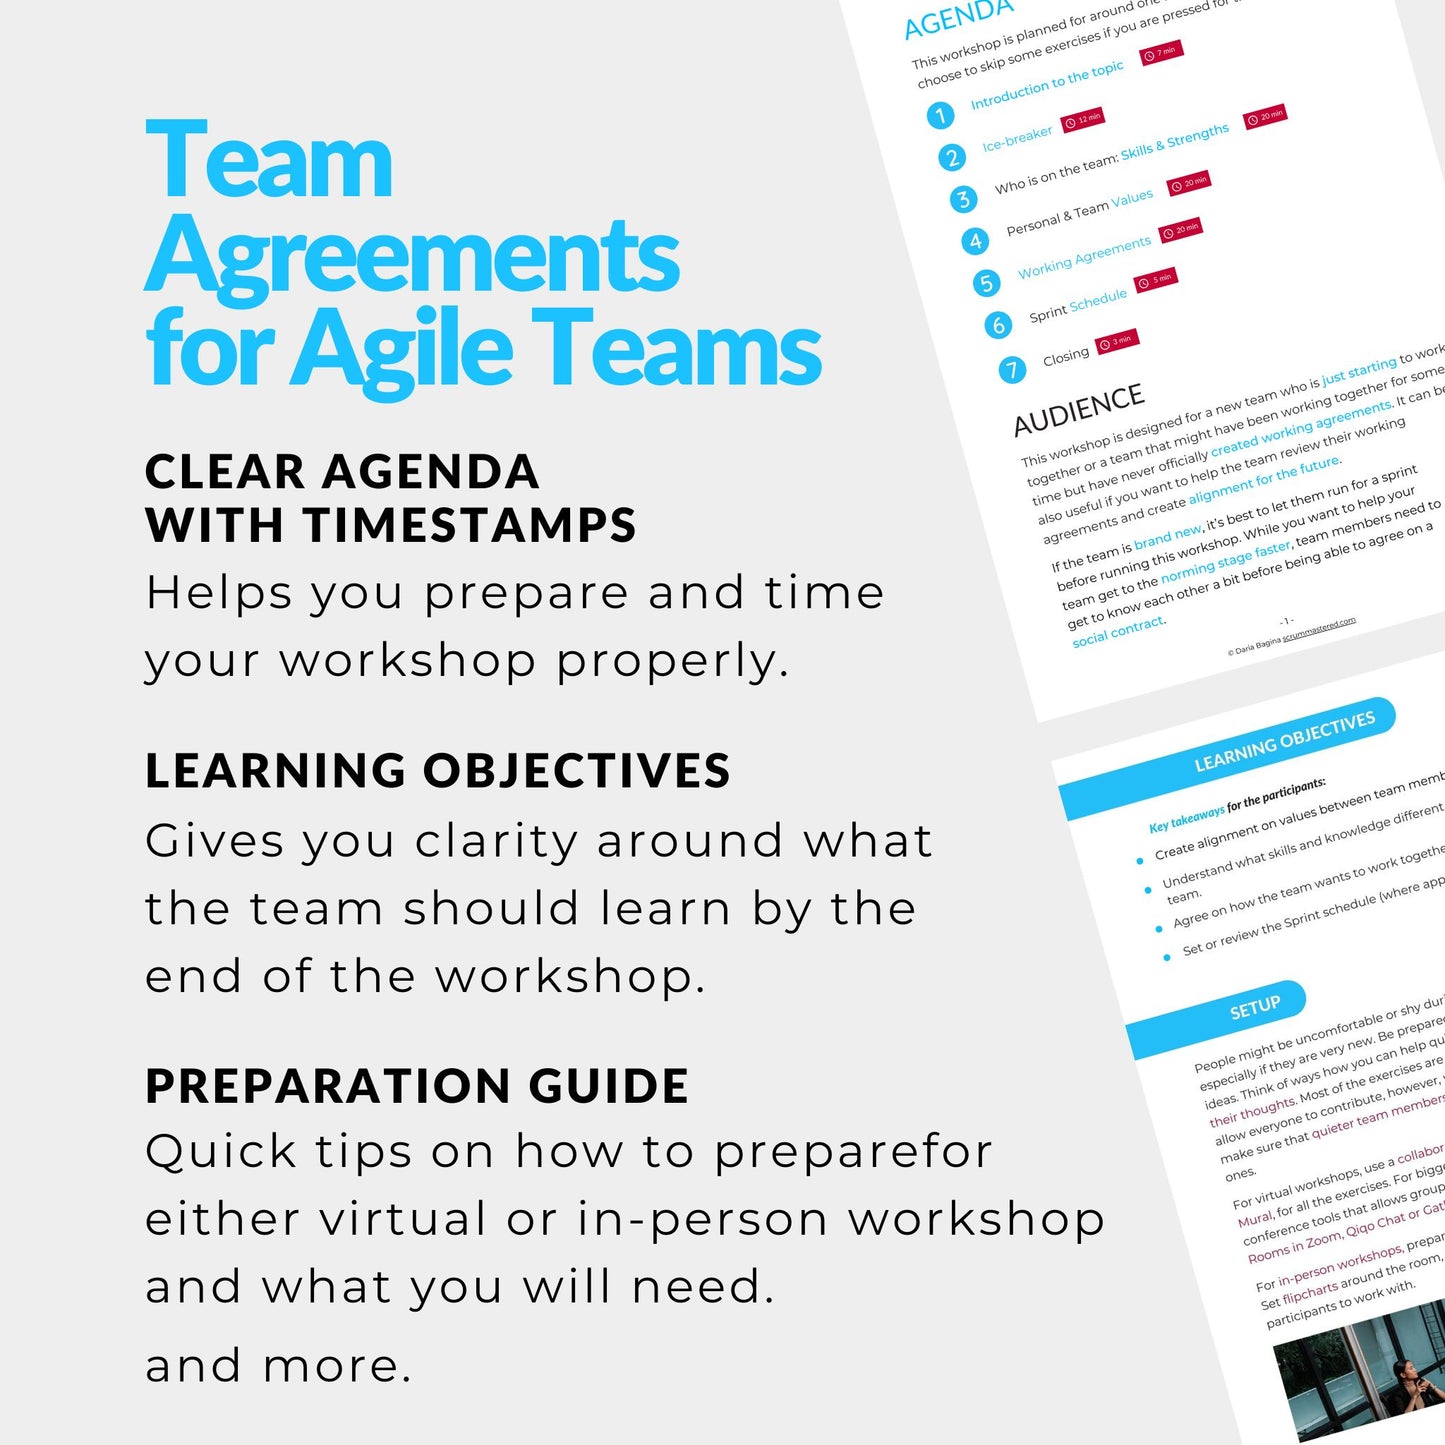 Team Agreements Workshop